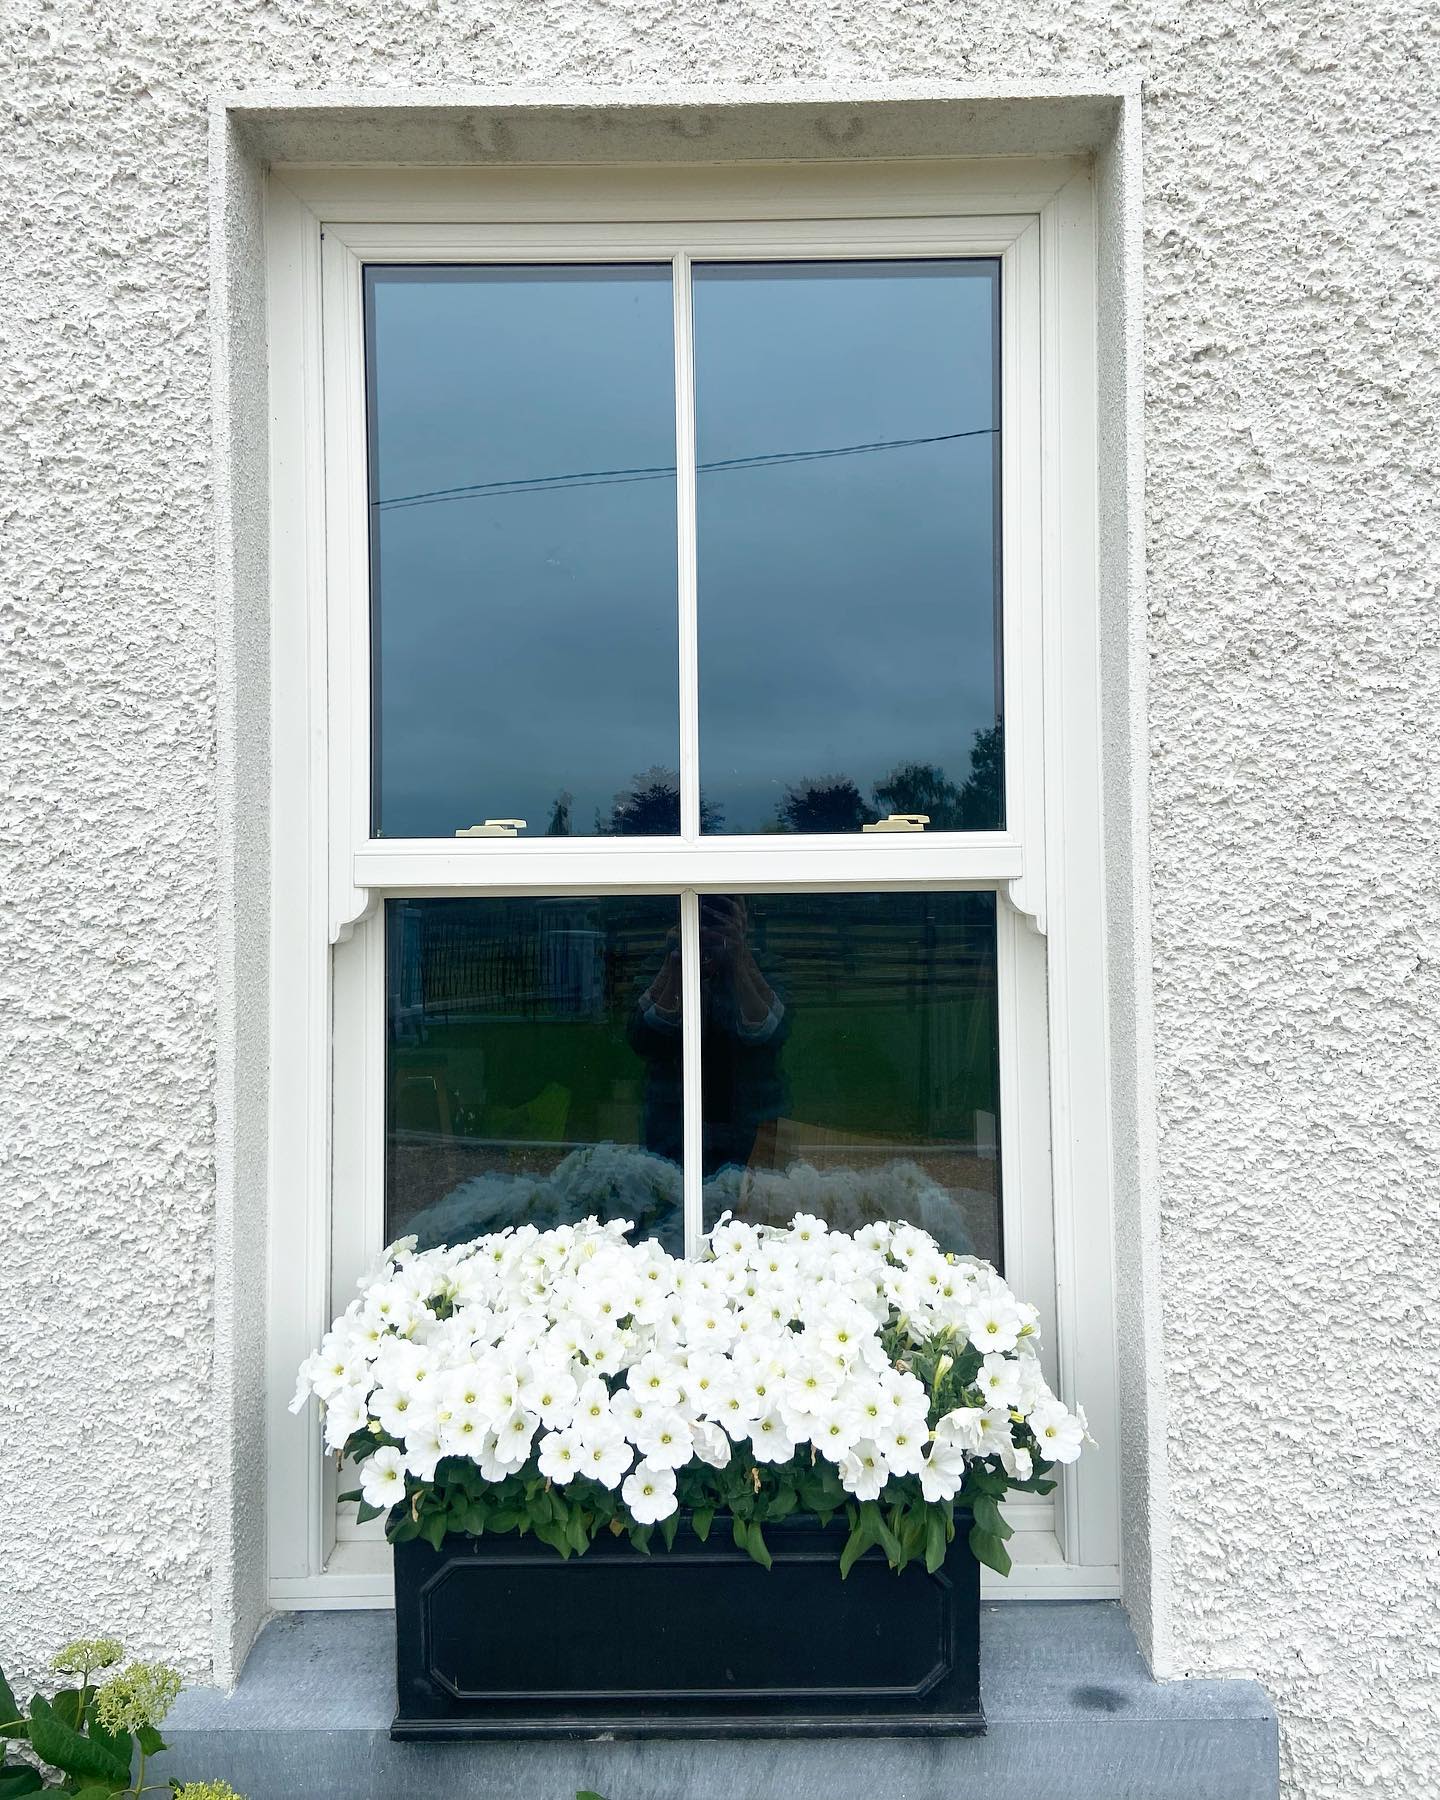 20 Window Box Flower Ideas With Photos of Inspiring Plantings ...